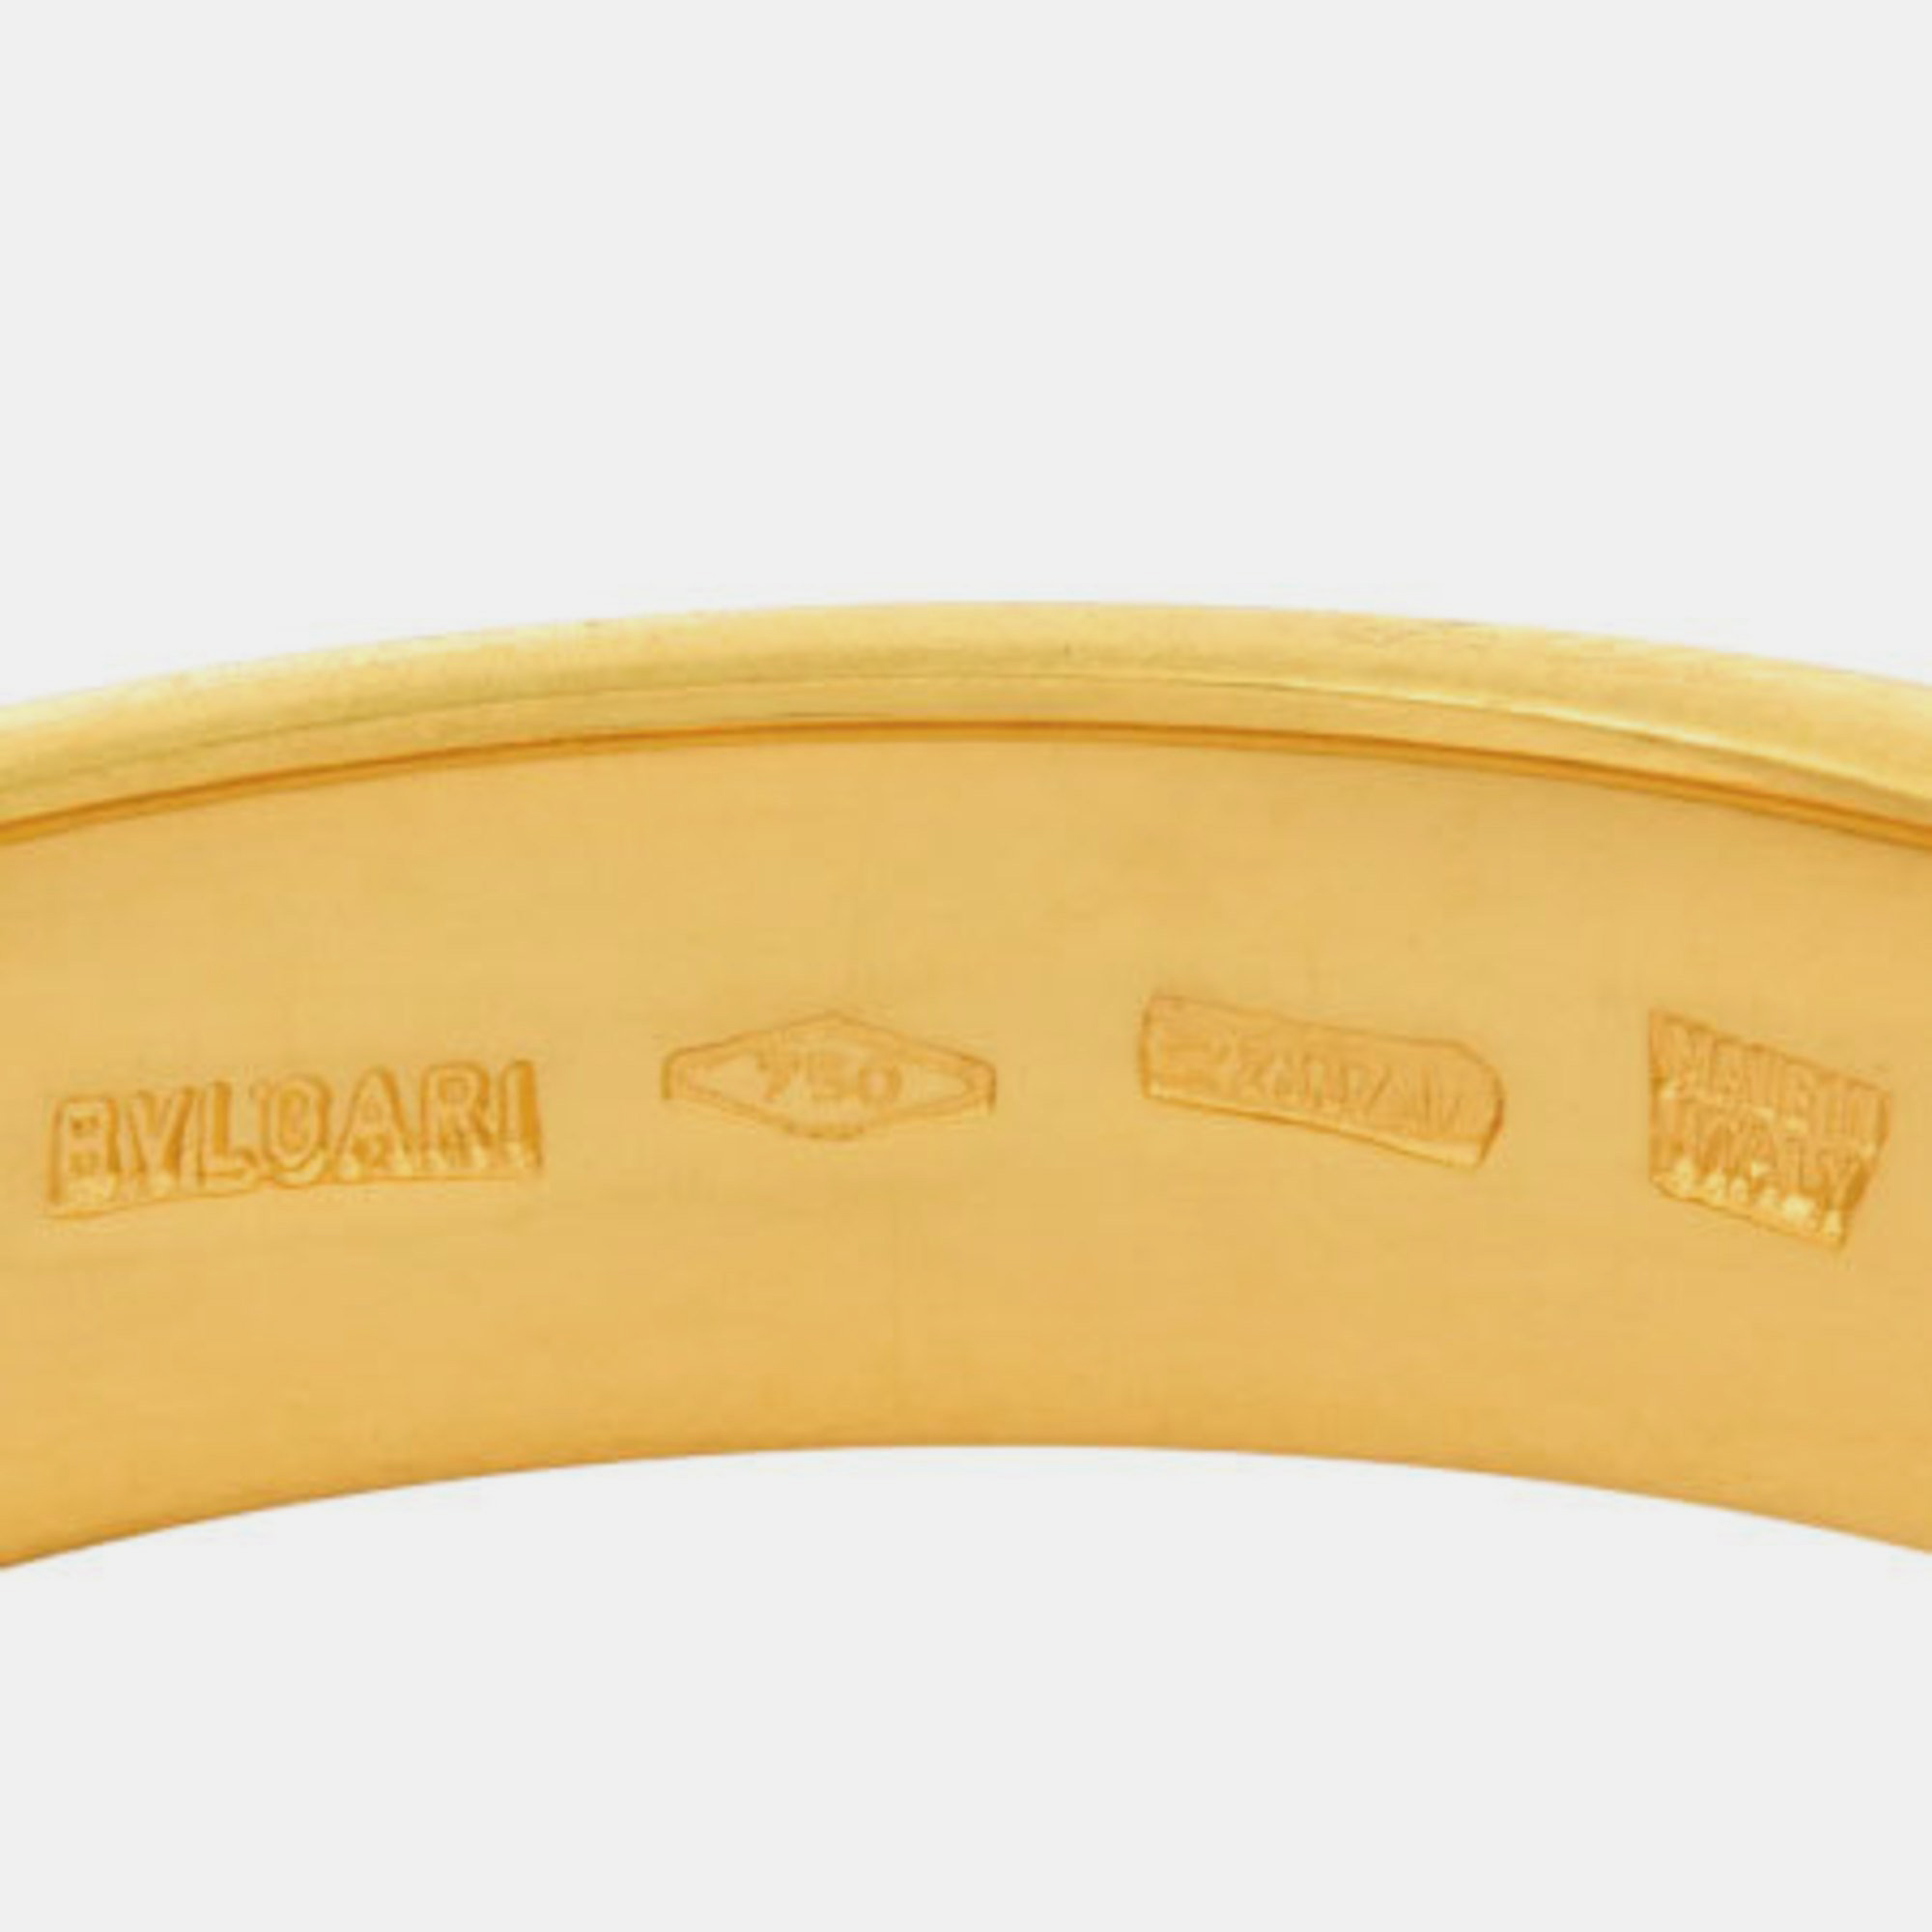 Bvlgari Bvlgari Bvlgari Double Logo 18K Yellow Gold Diamond Ring EU 54.5